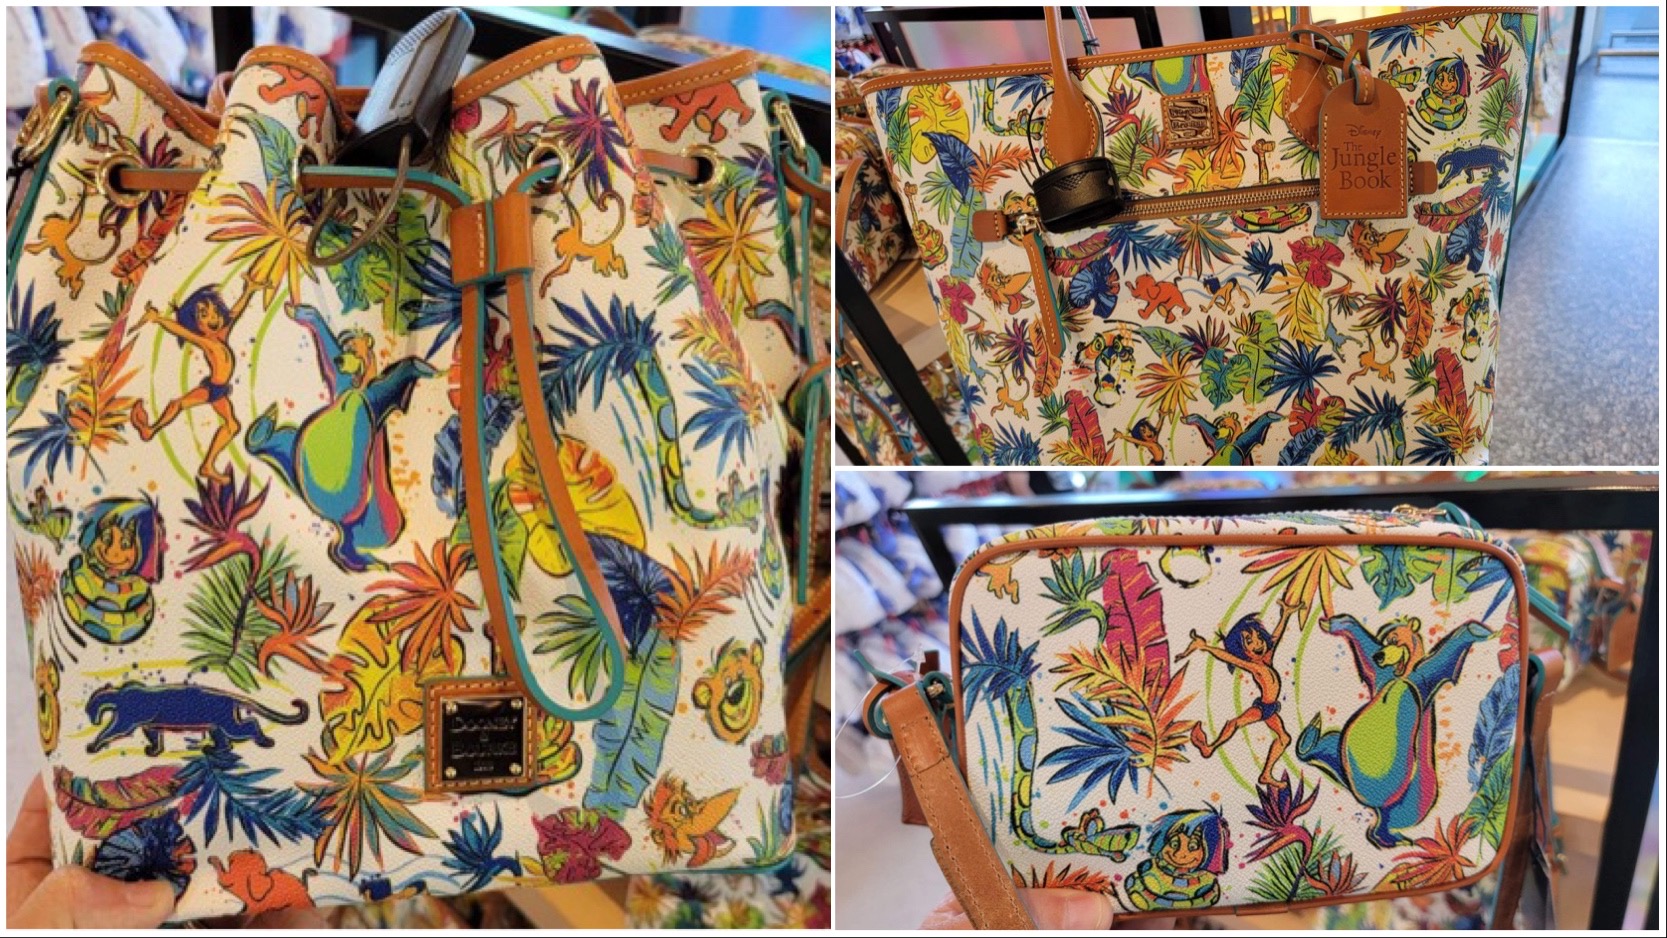 Disney Dooney & Bourke Bag - The Jungle Book Tote Bag